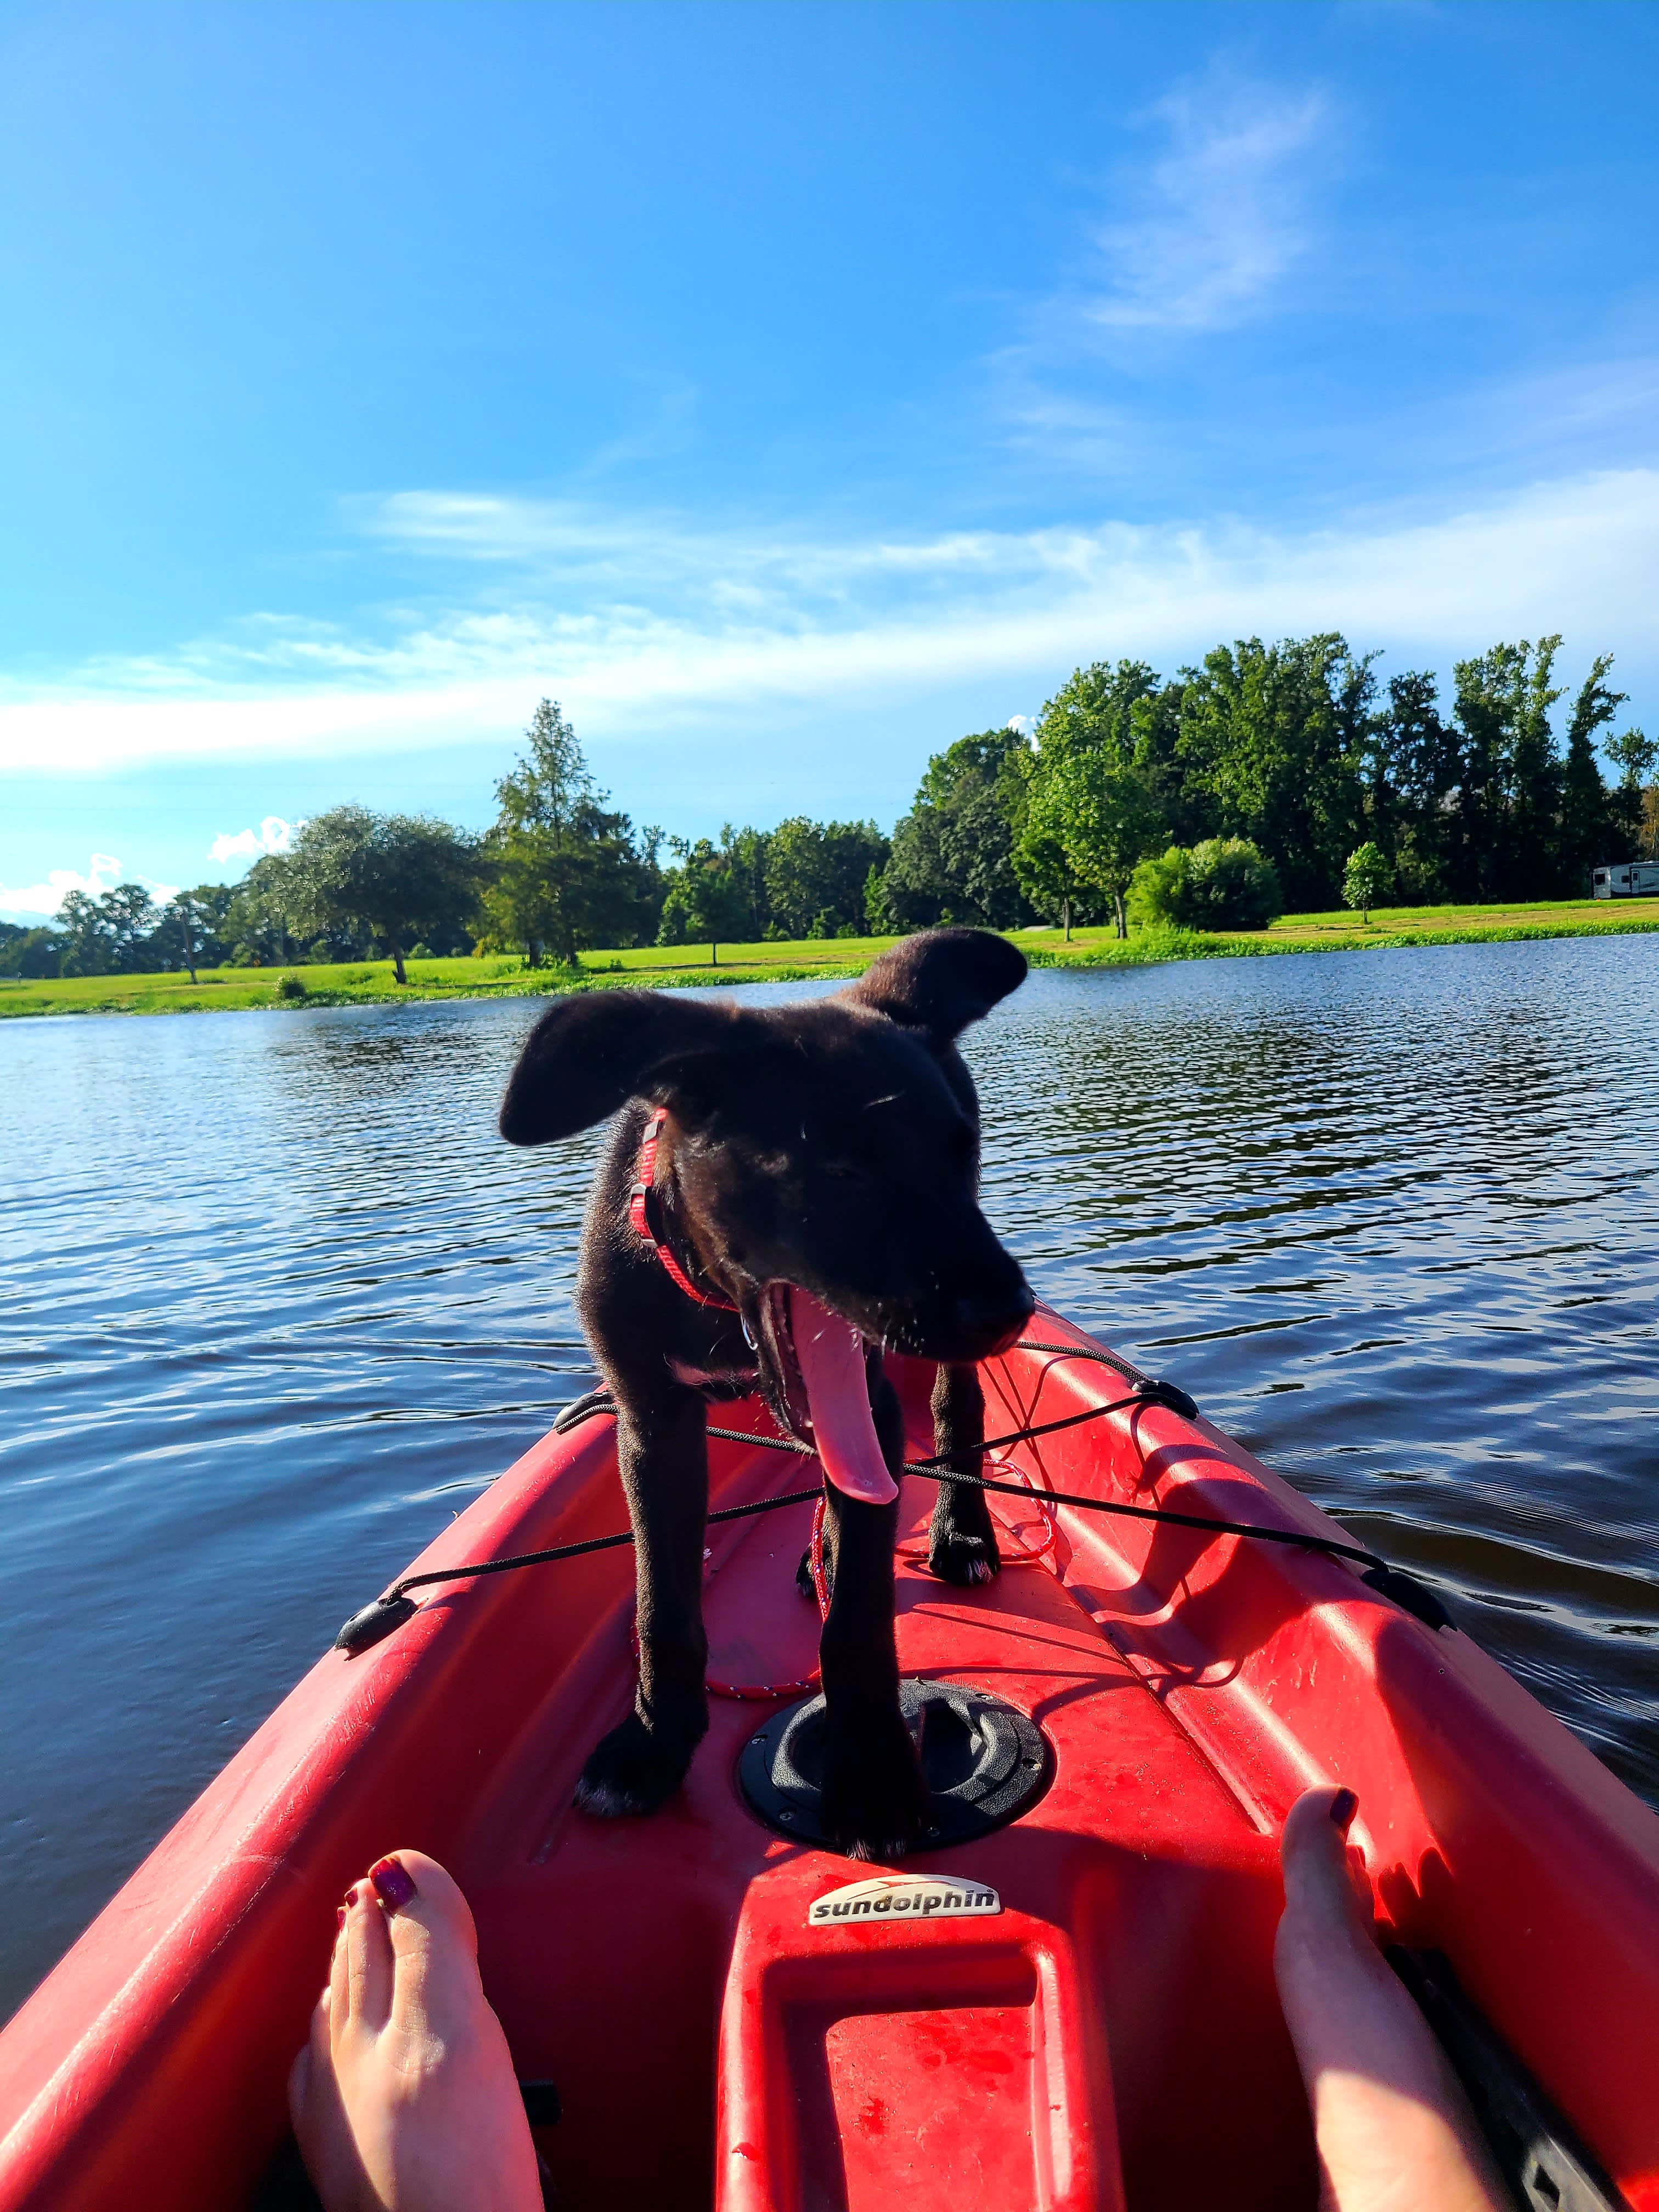 Pet friendly! Pups love kayaking too. 